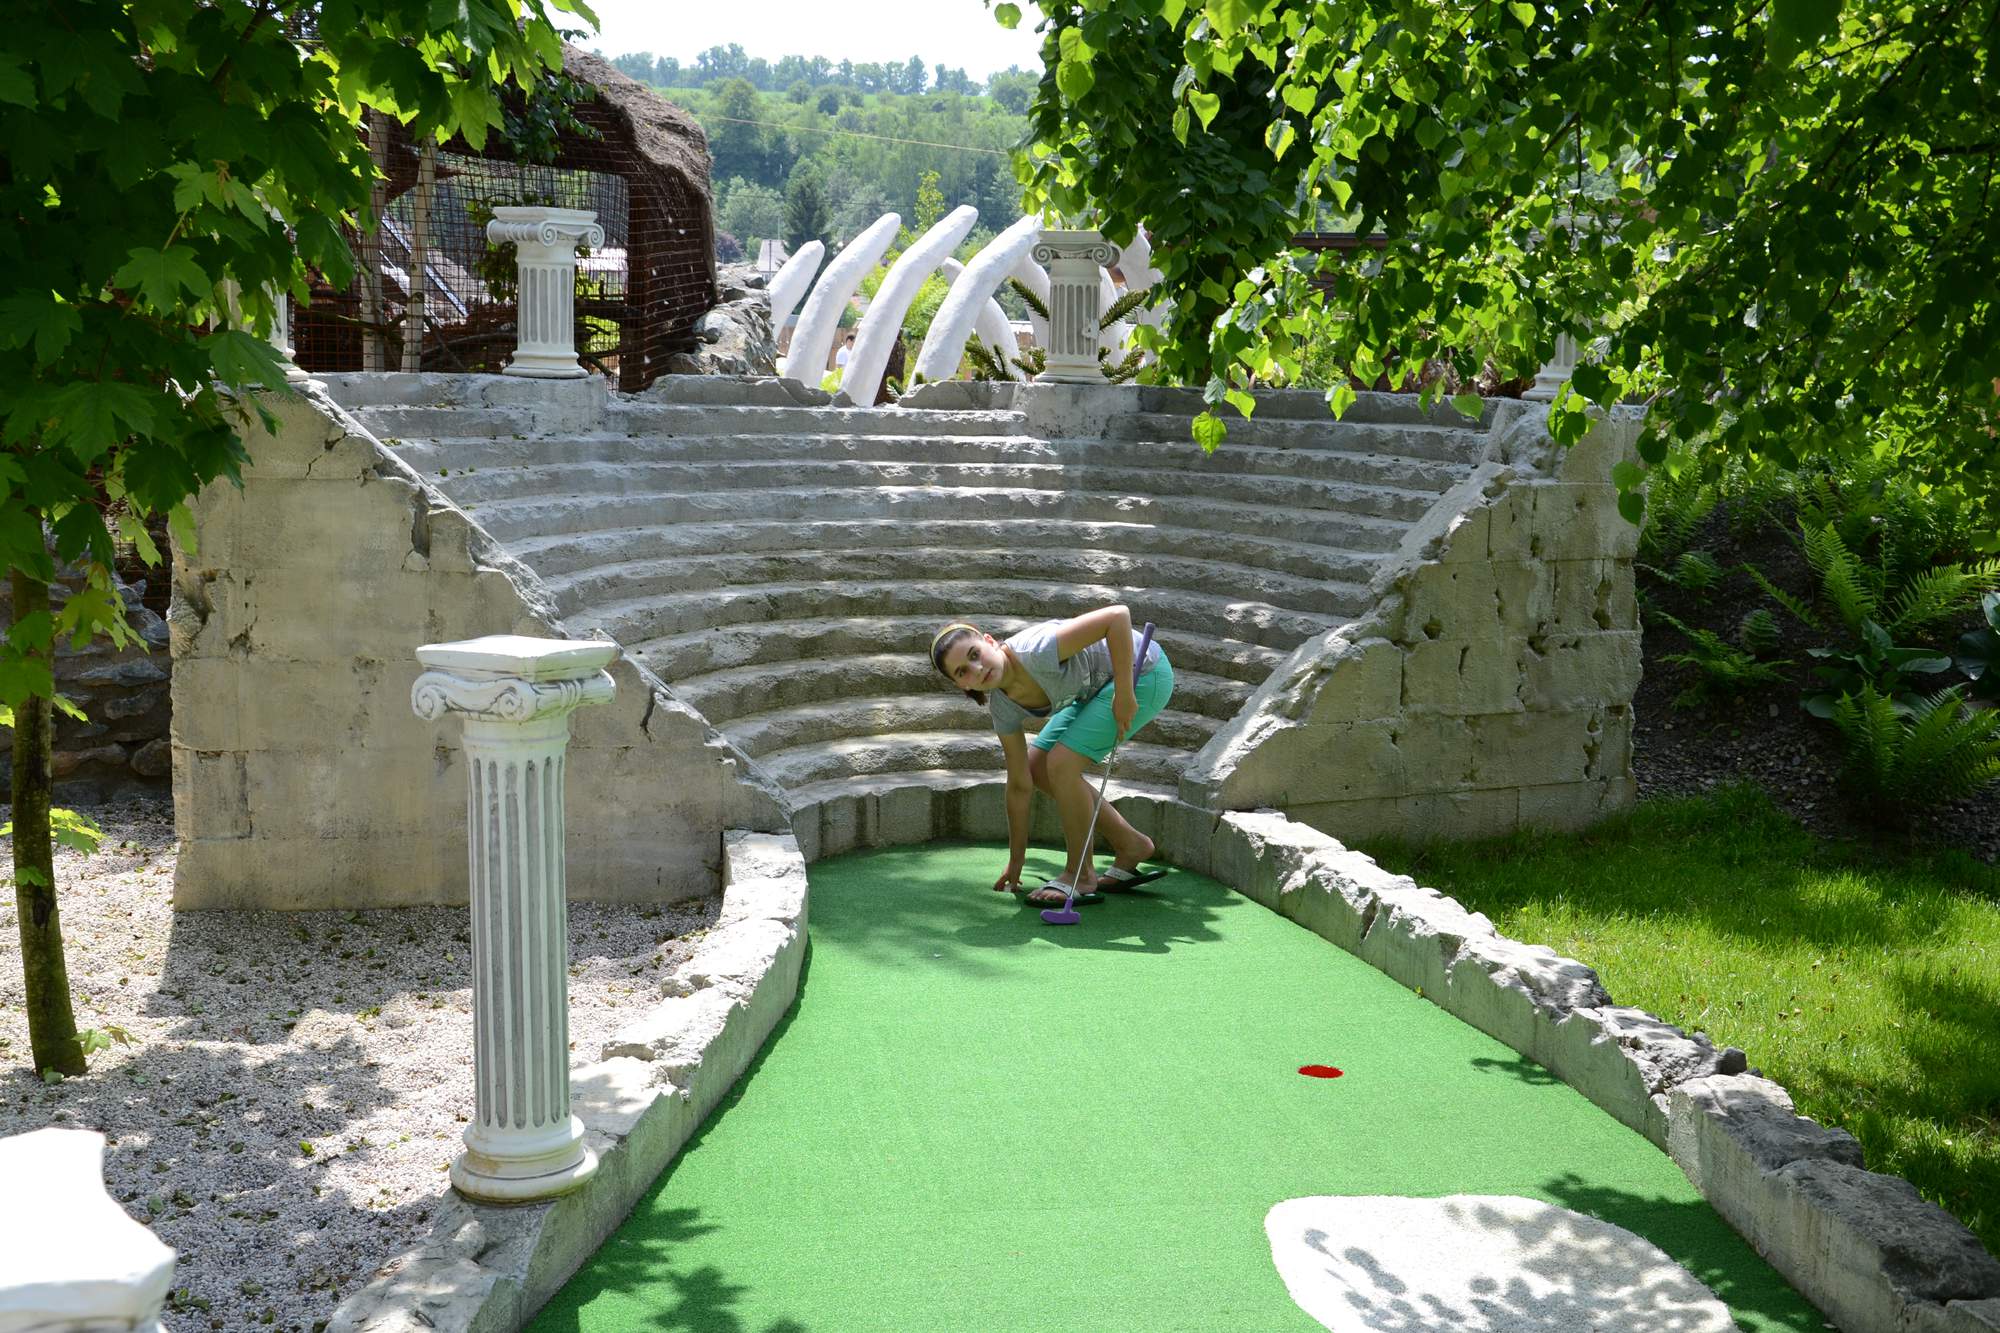 Fantasy golf